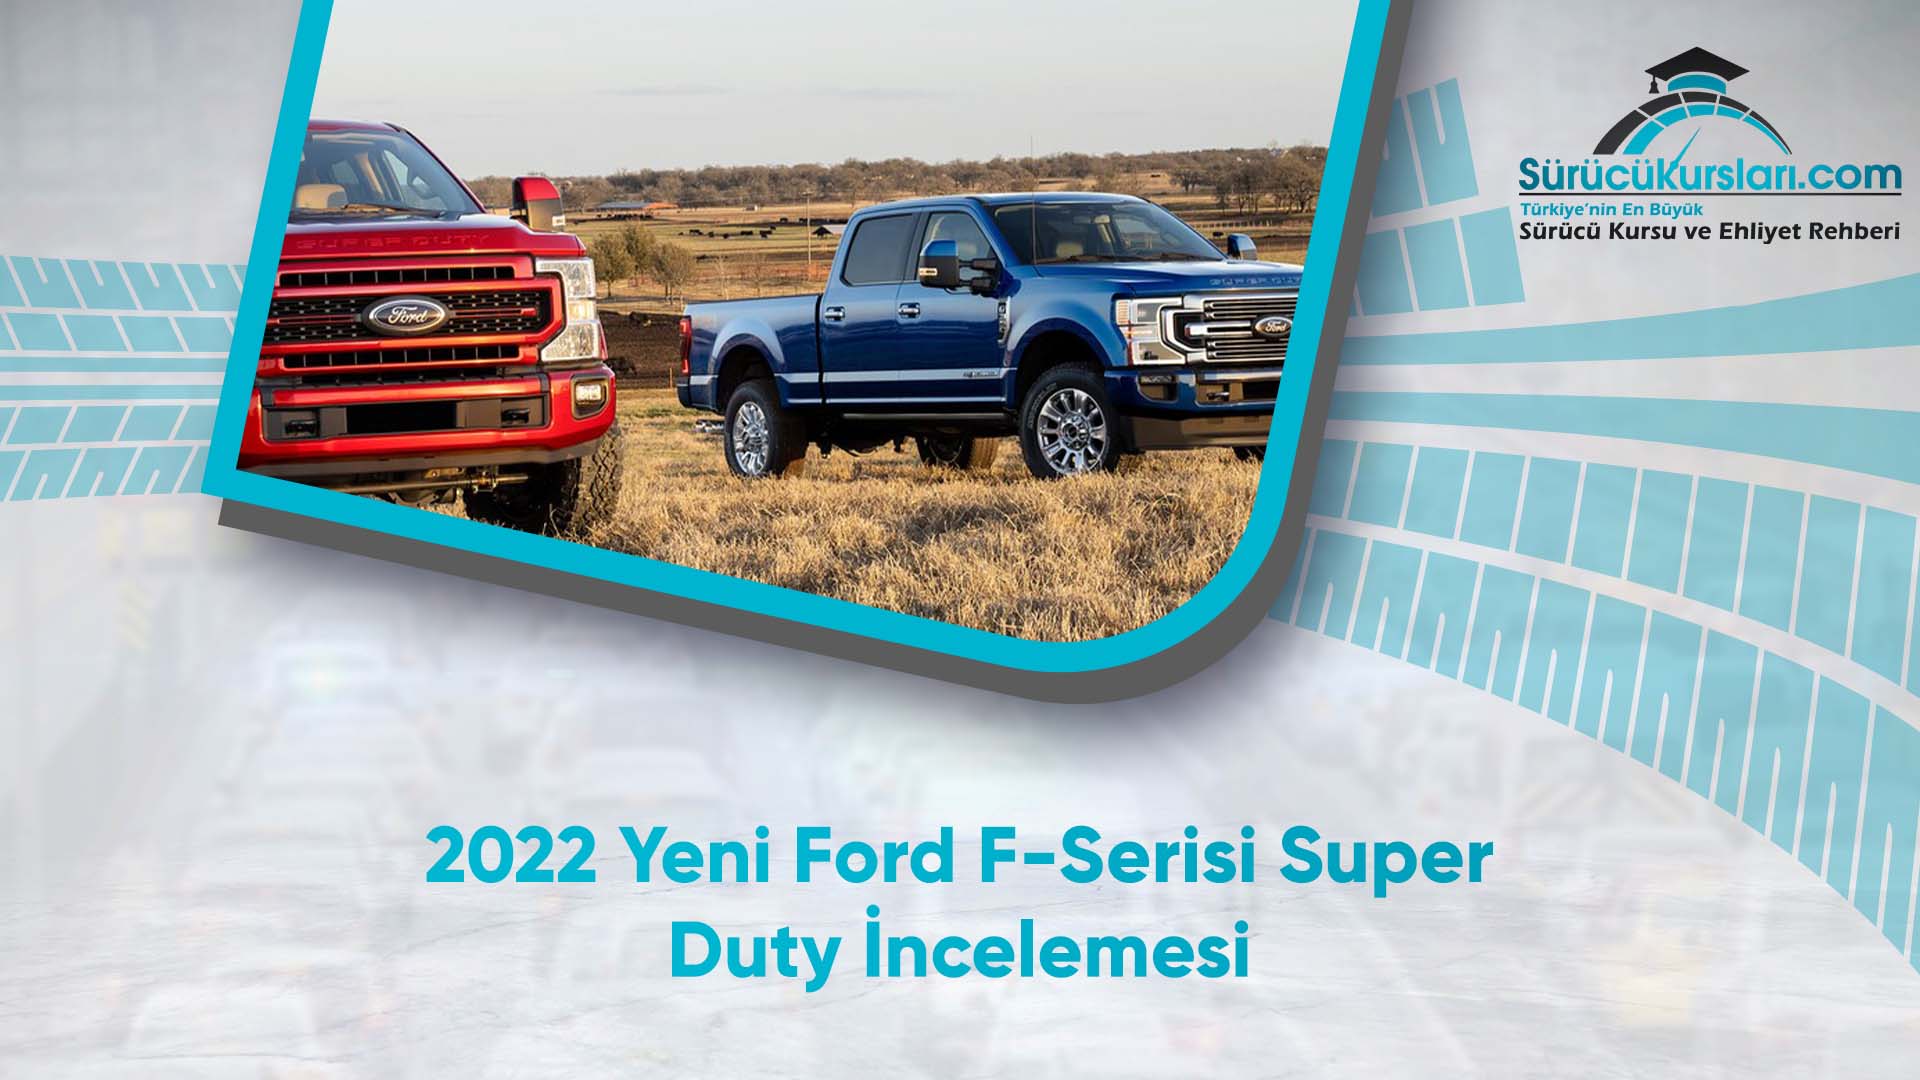 2022 Yeni Ford F-Serisi Super Duty İncelemesi